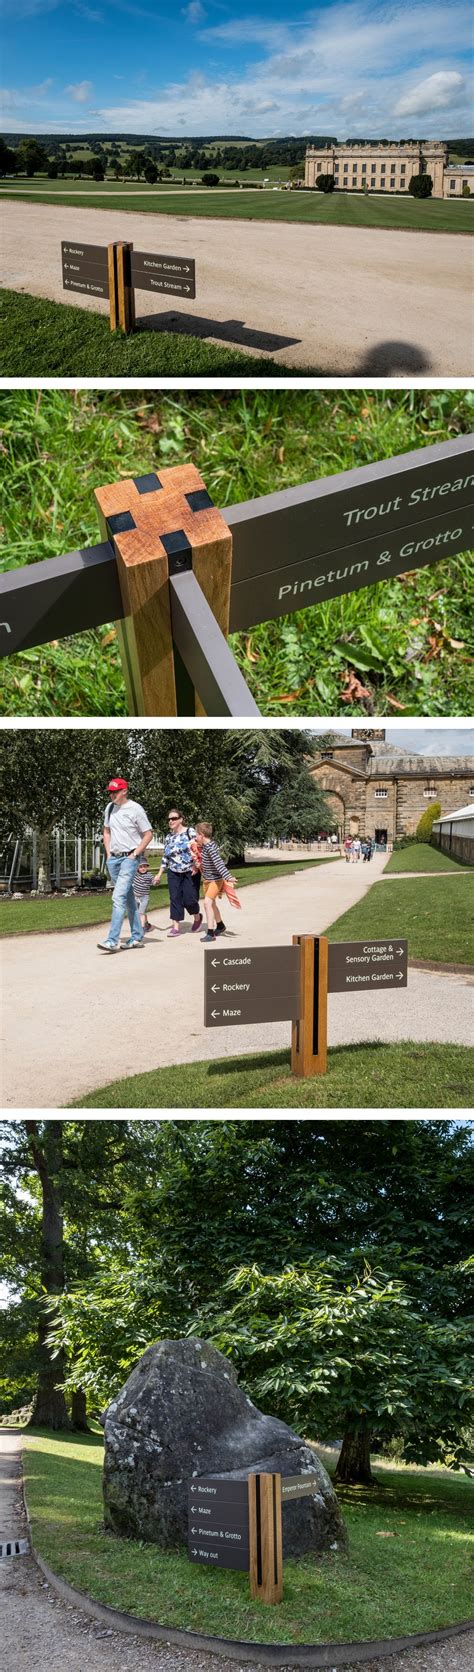 Chatsworth House signage detailed images, wayfinding signage design by ABG Wooden Signage ...